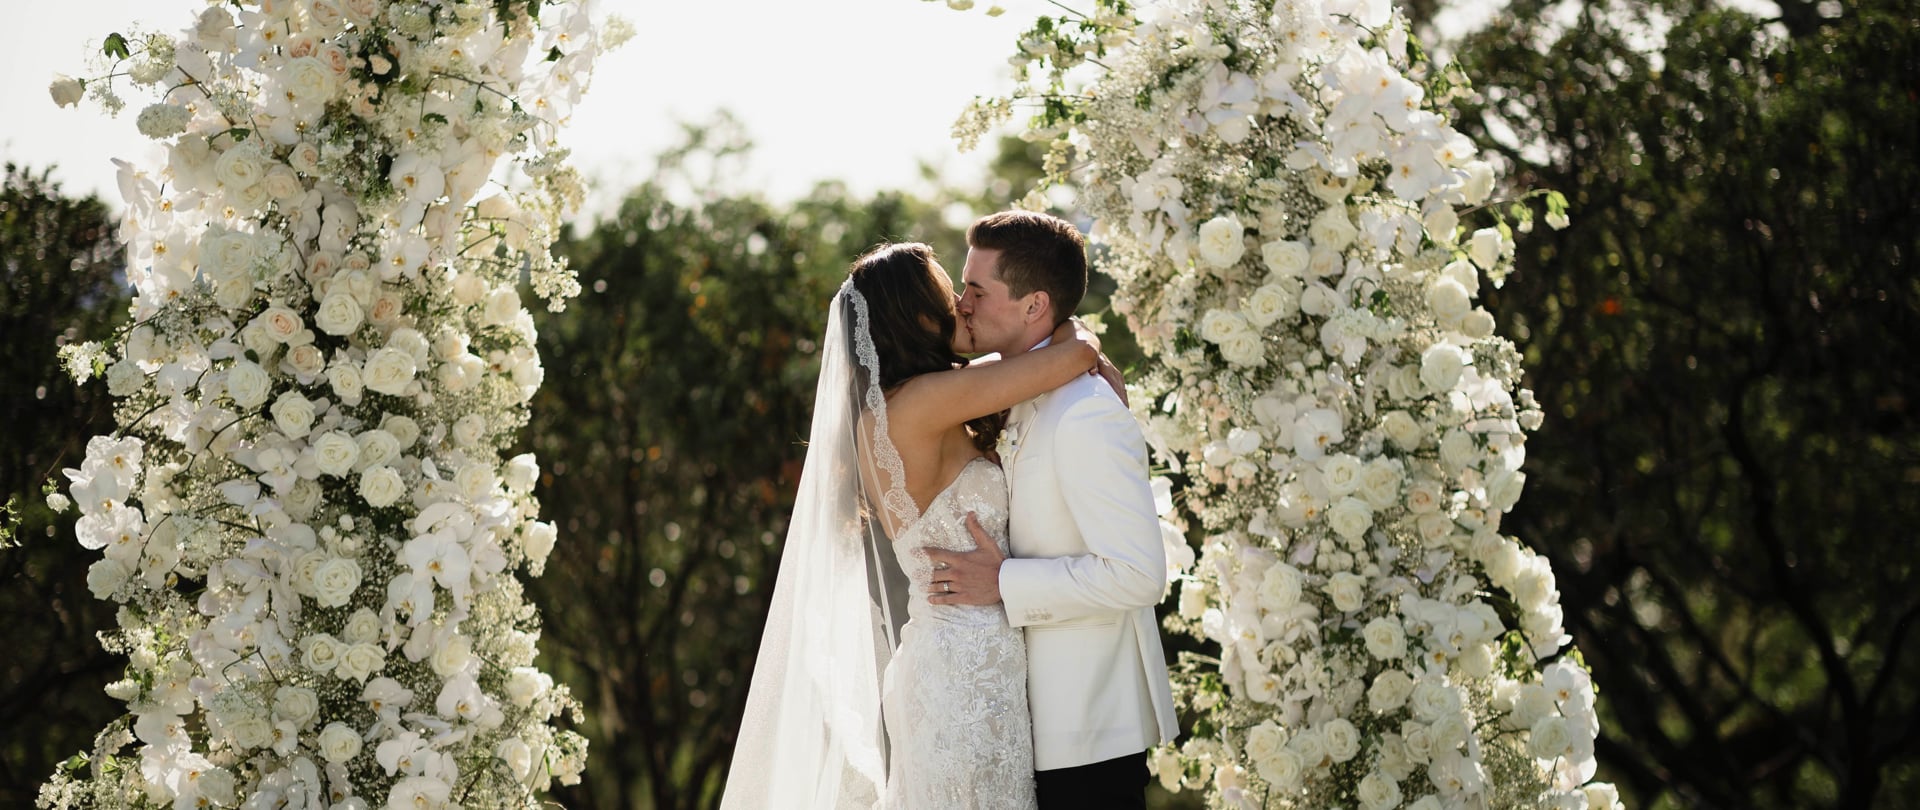 Emily & Torben Wedding Video Filmed at California, United States